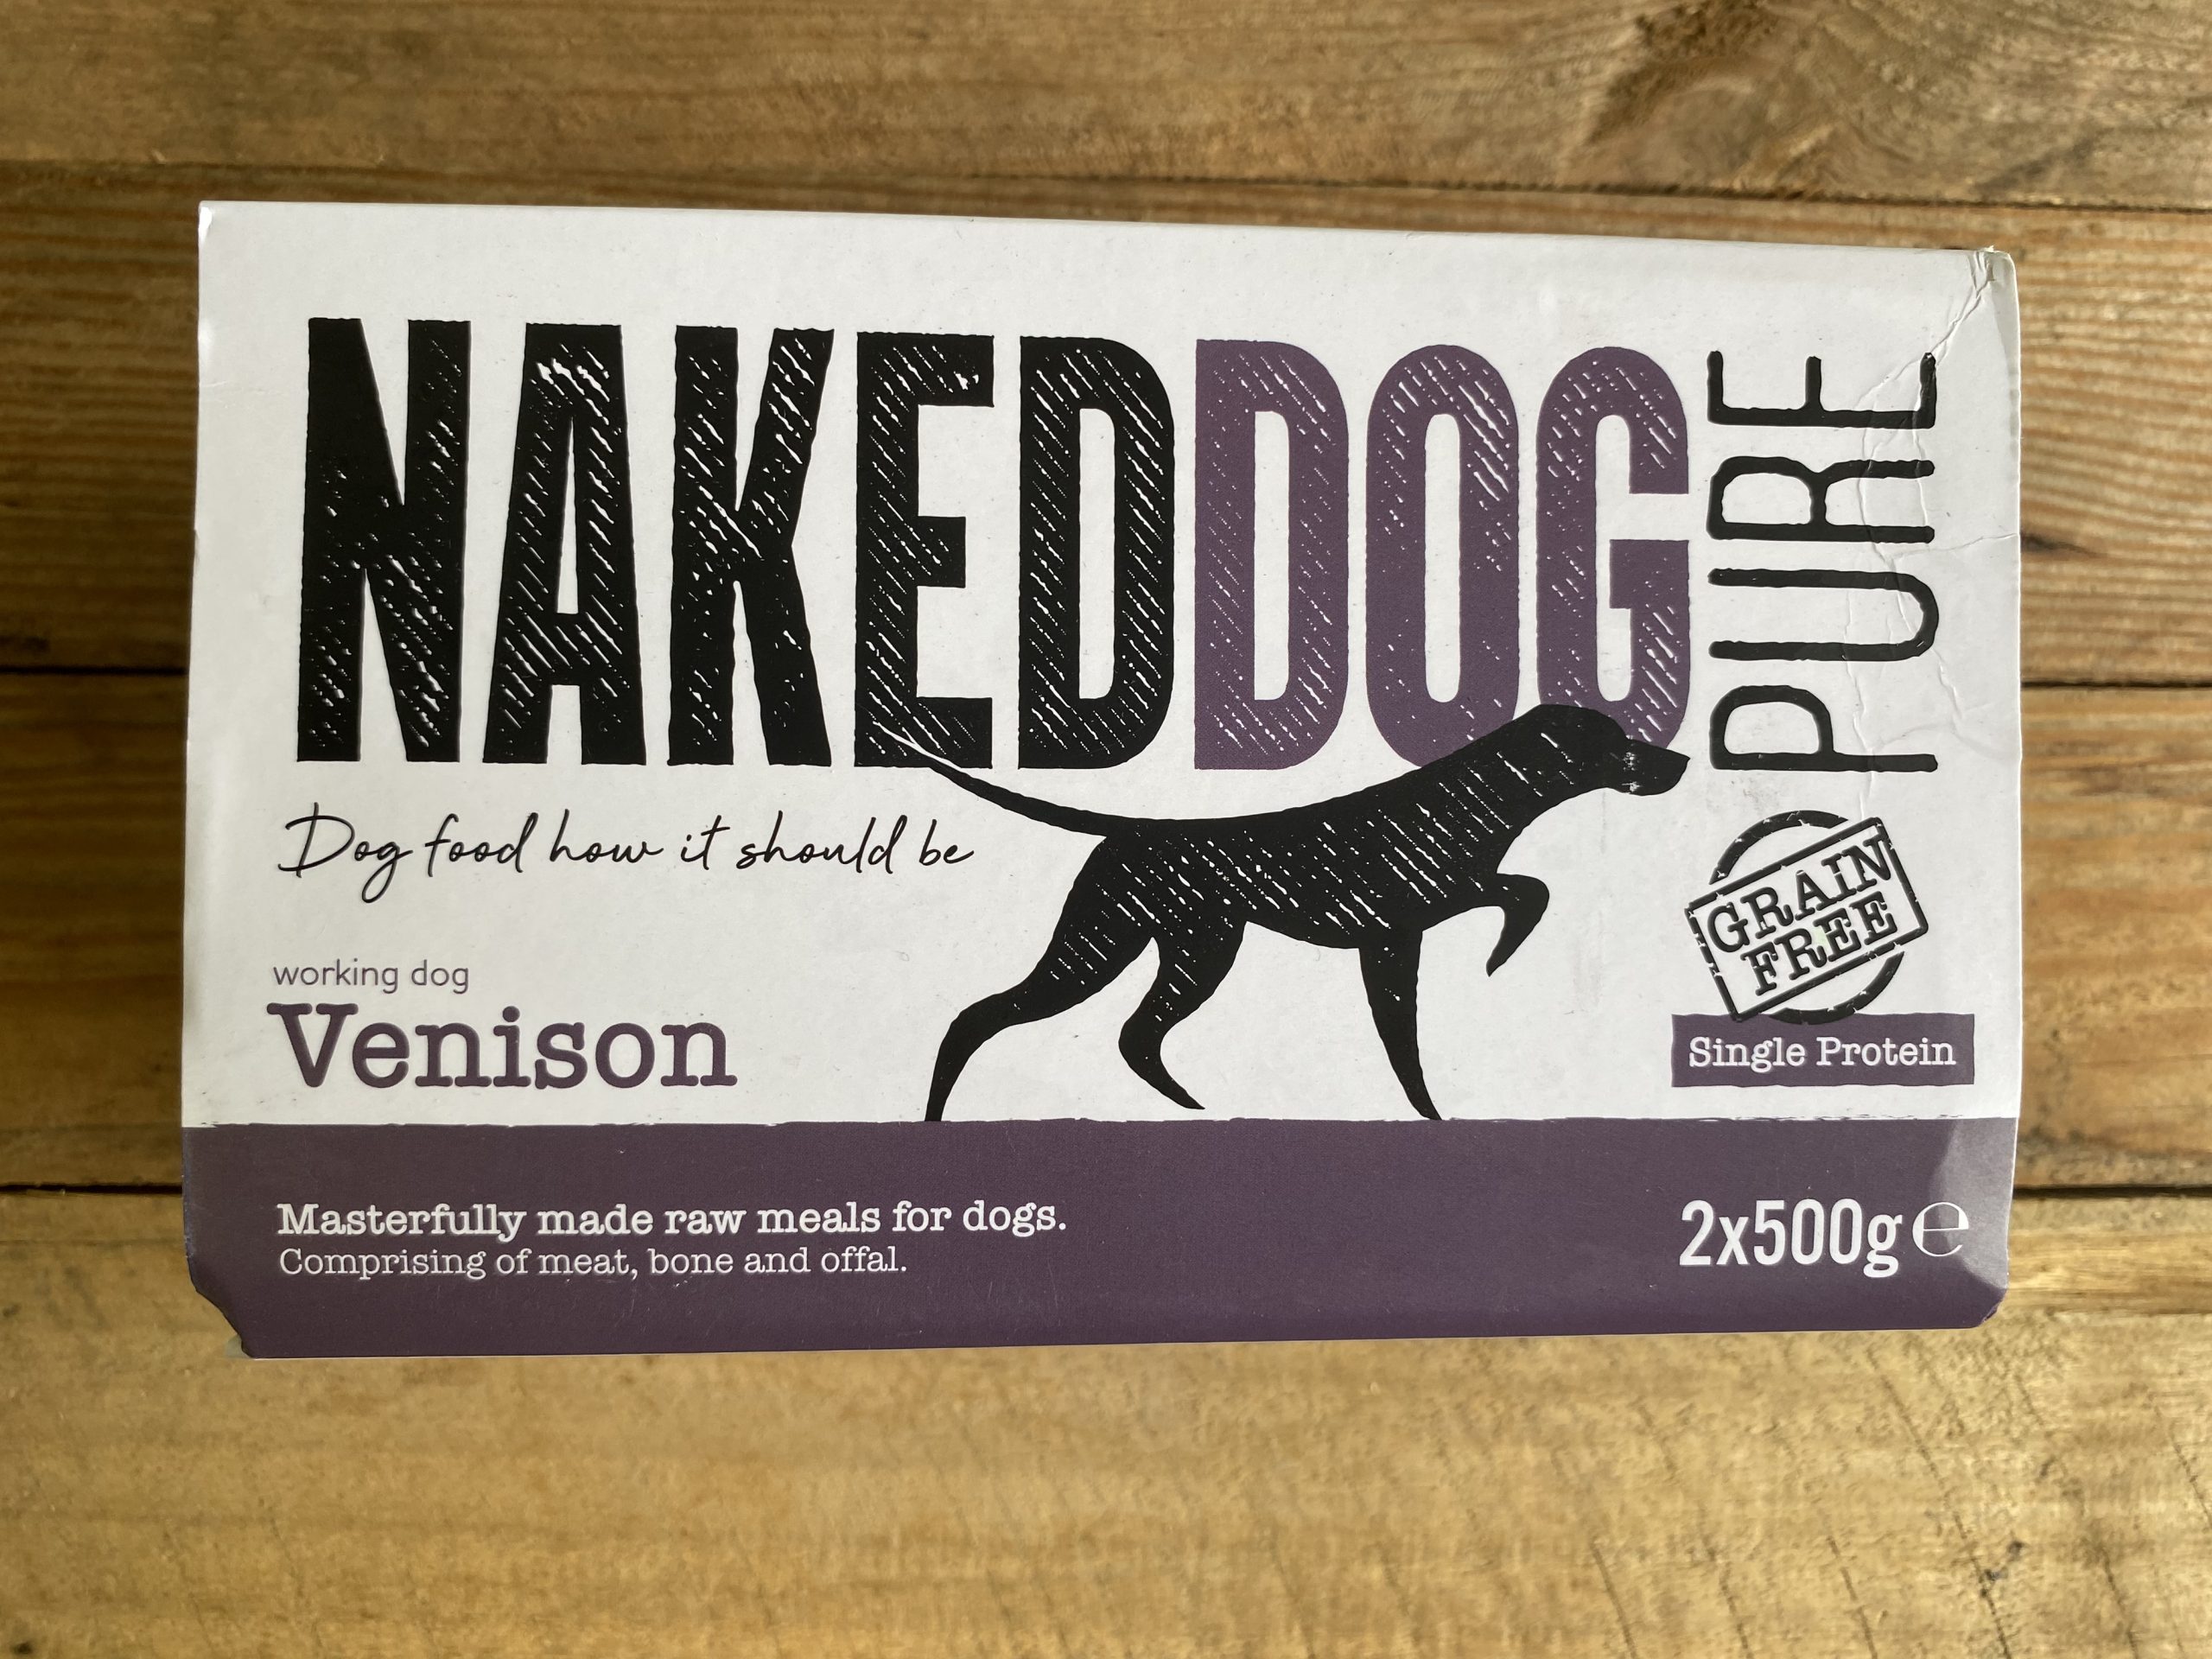 Naked Dog Pure Venison – 2 X 500g